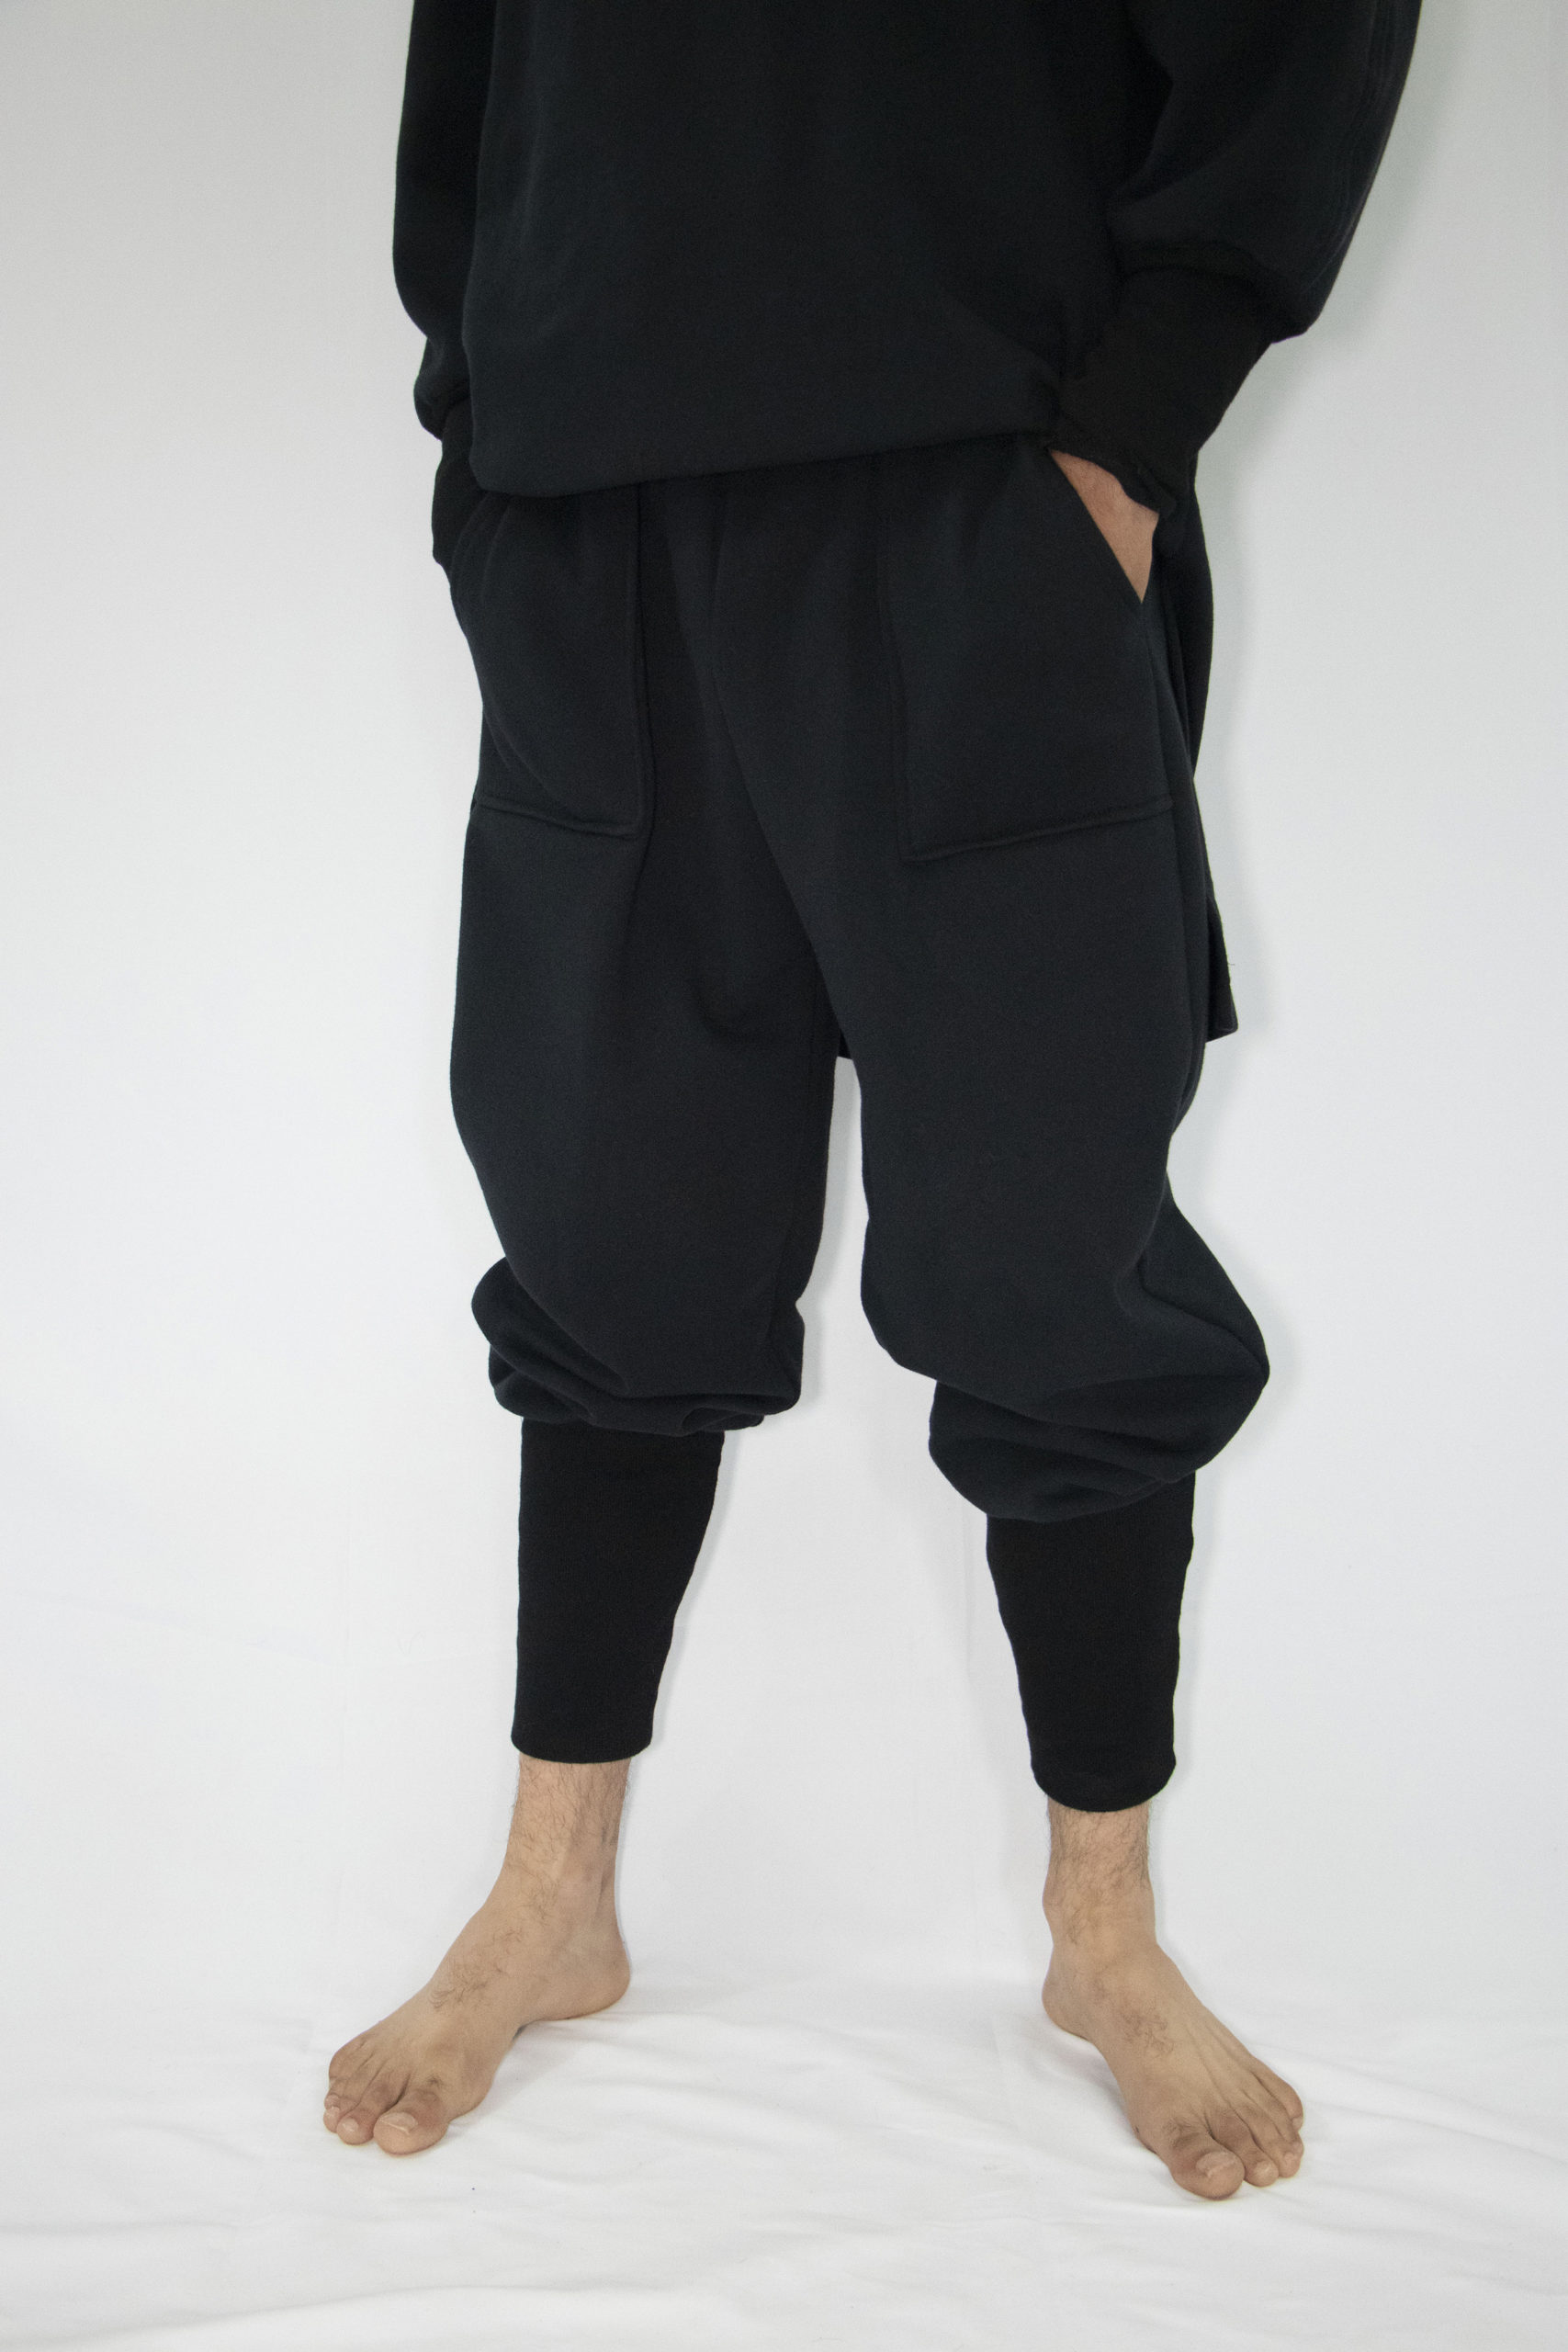 Man wearing black unisex sweatpants in organic cotton